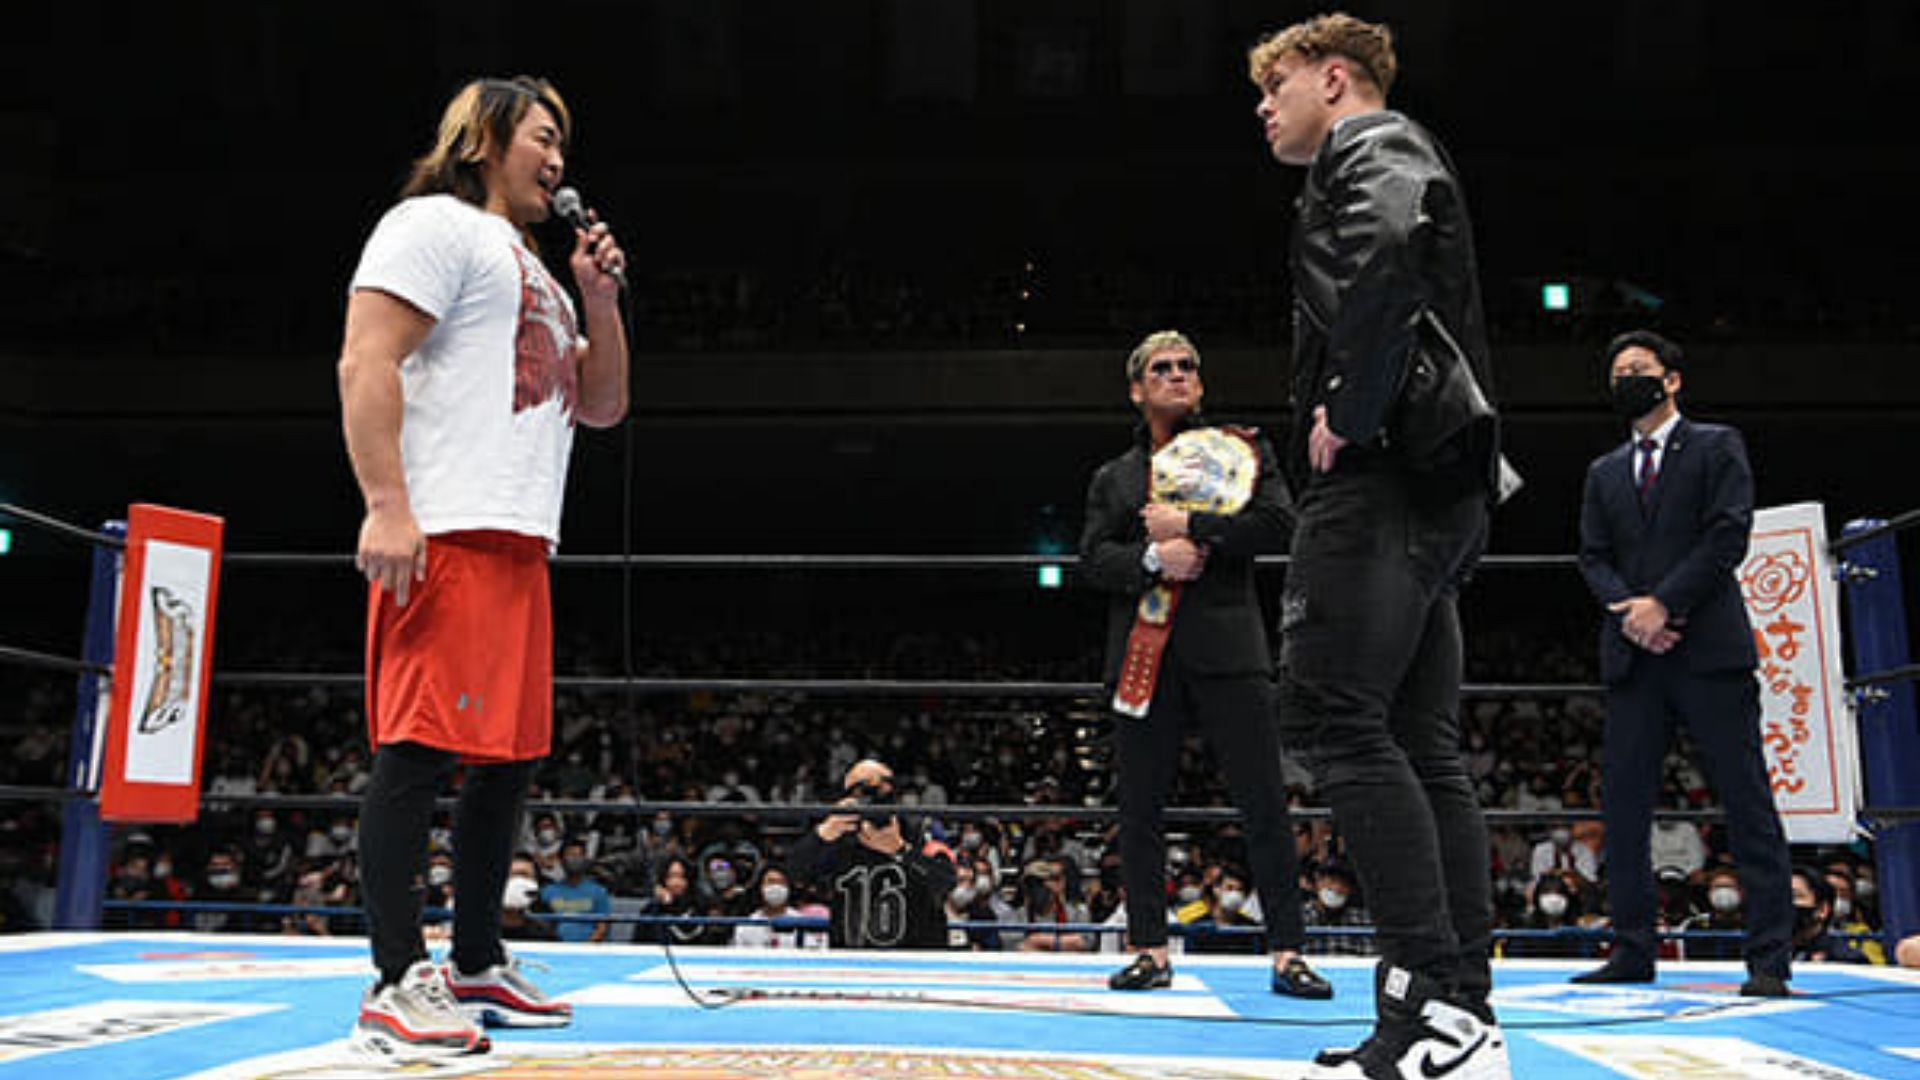 SANADA has vacated the IWGP US Heavyweight Championship